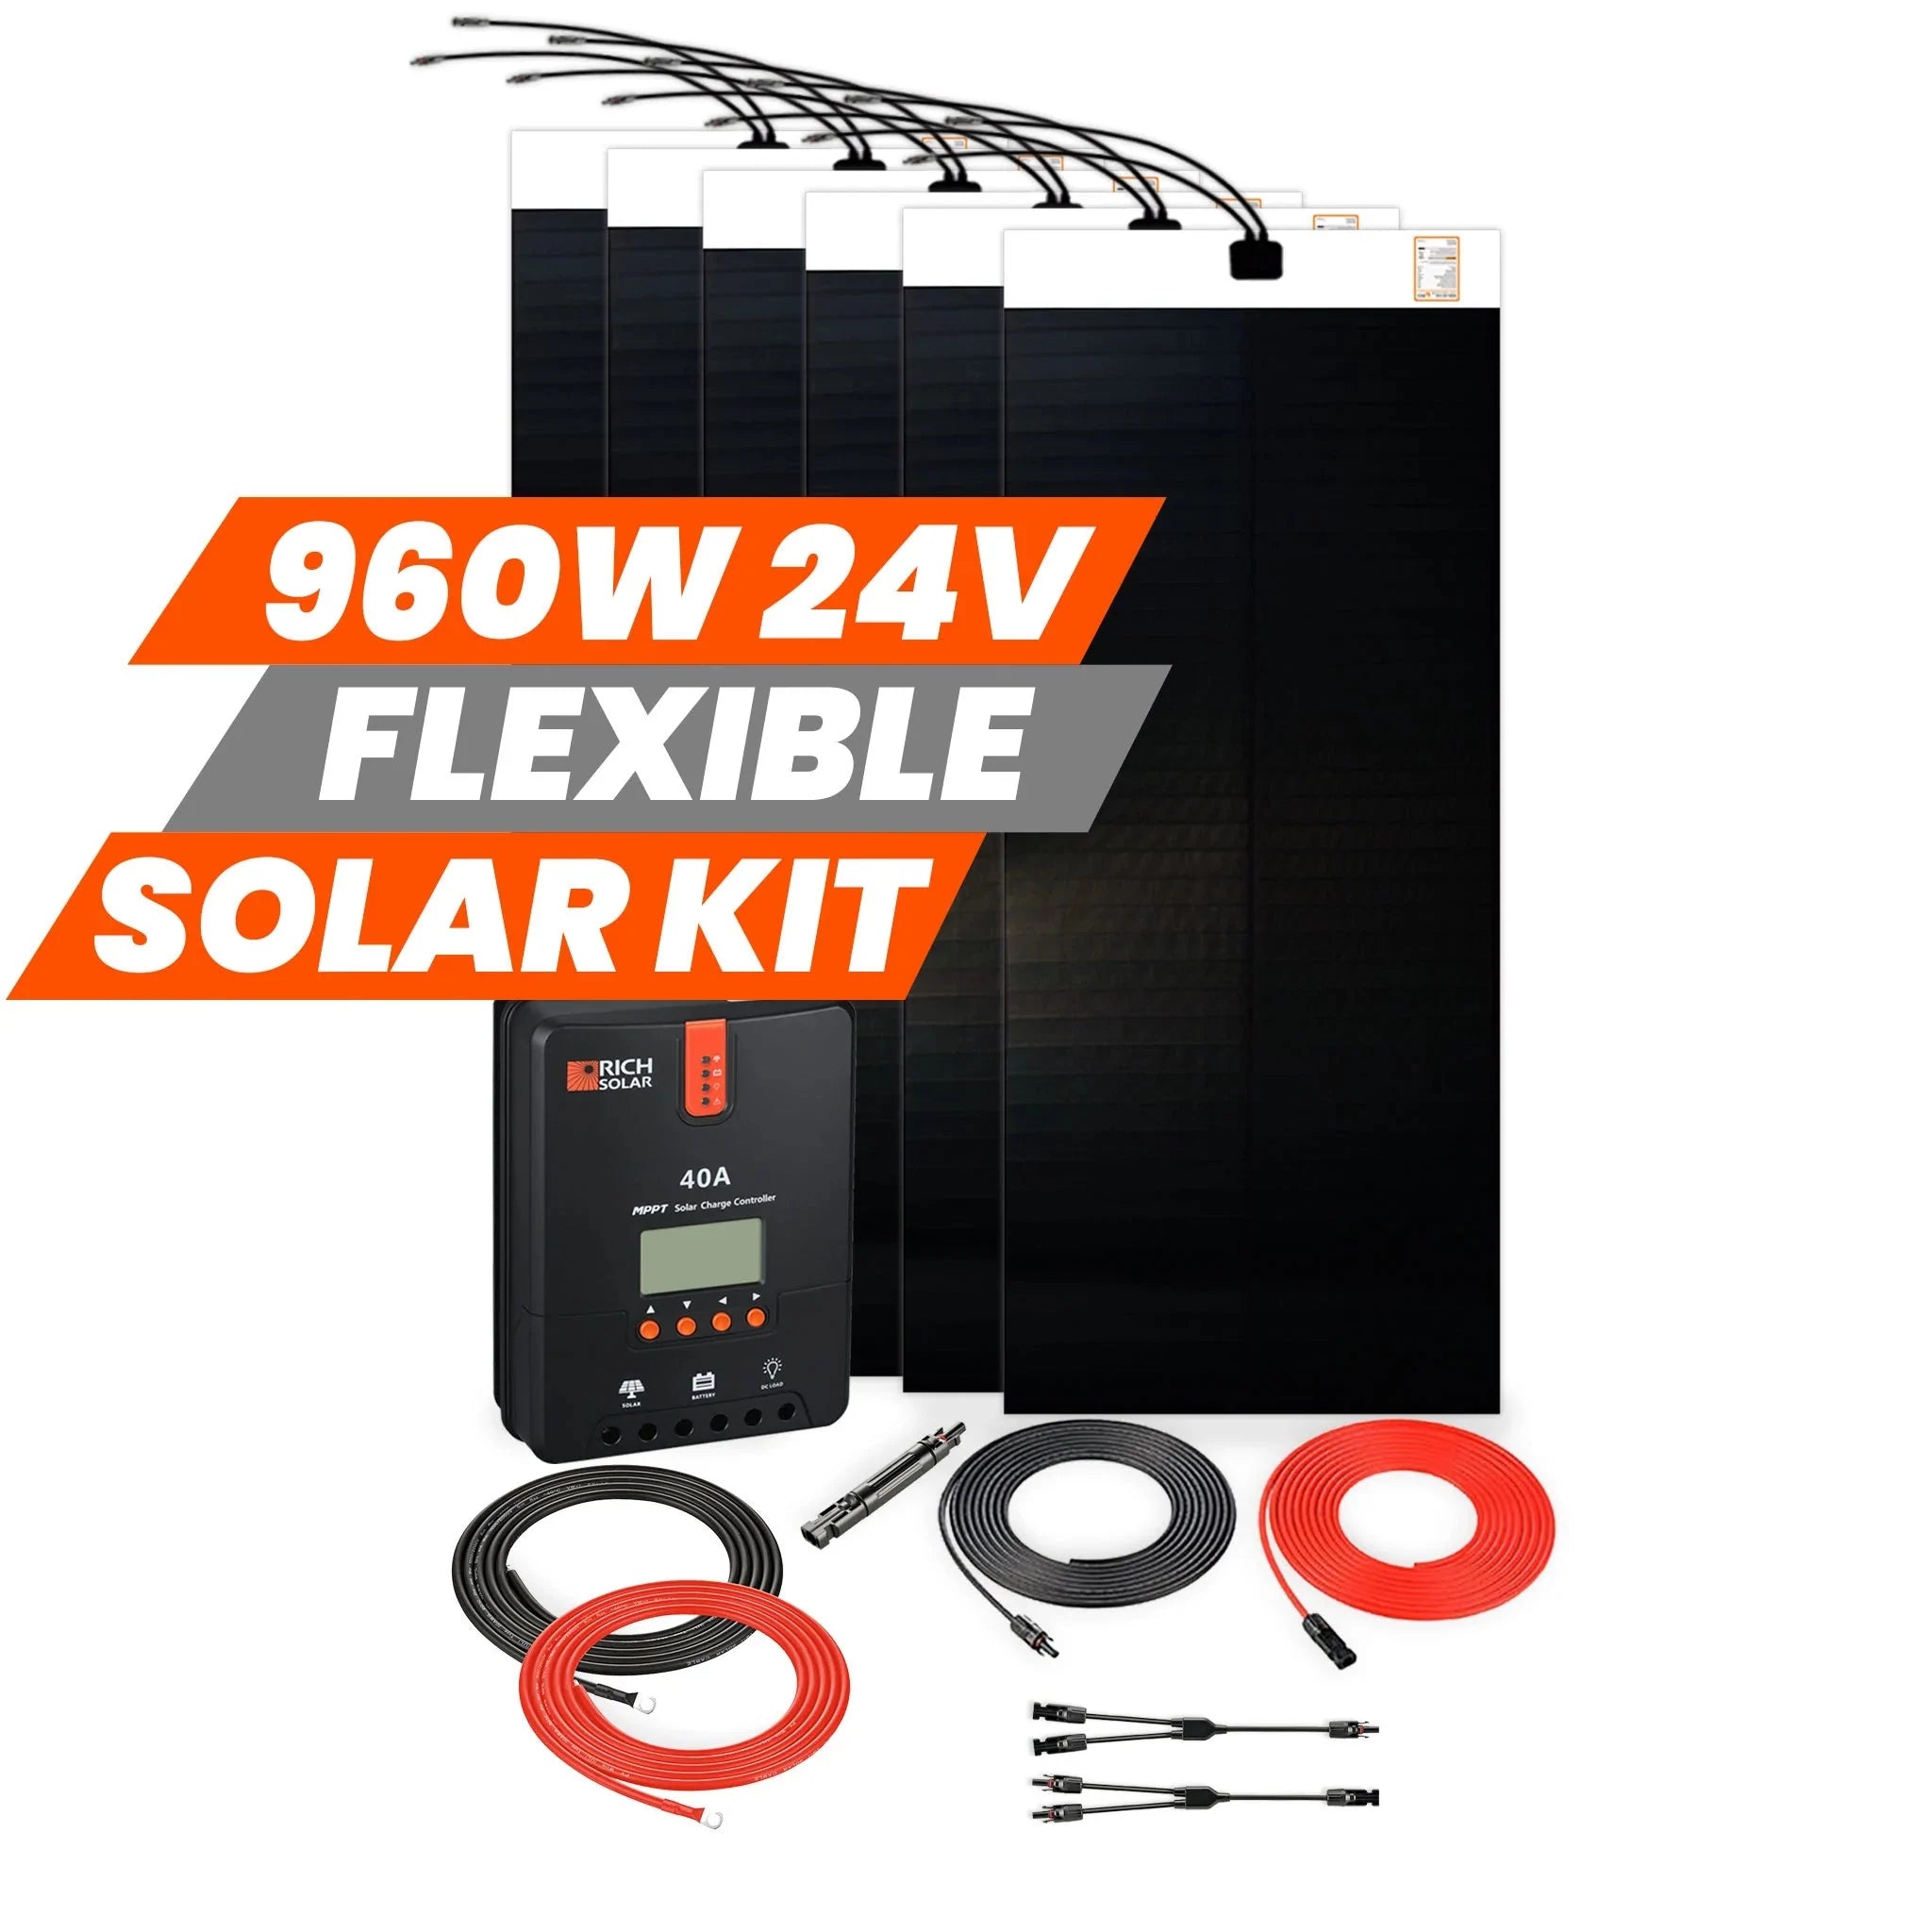 Rich Solar 960 Watt Flexible Solar Kit - RS-960 Watt Flexible Solar Kit - Avanquil